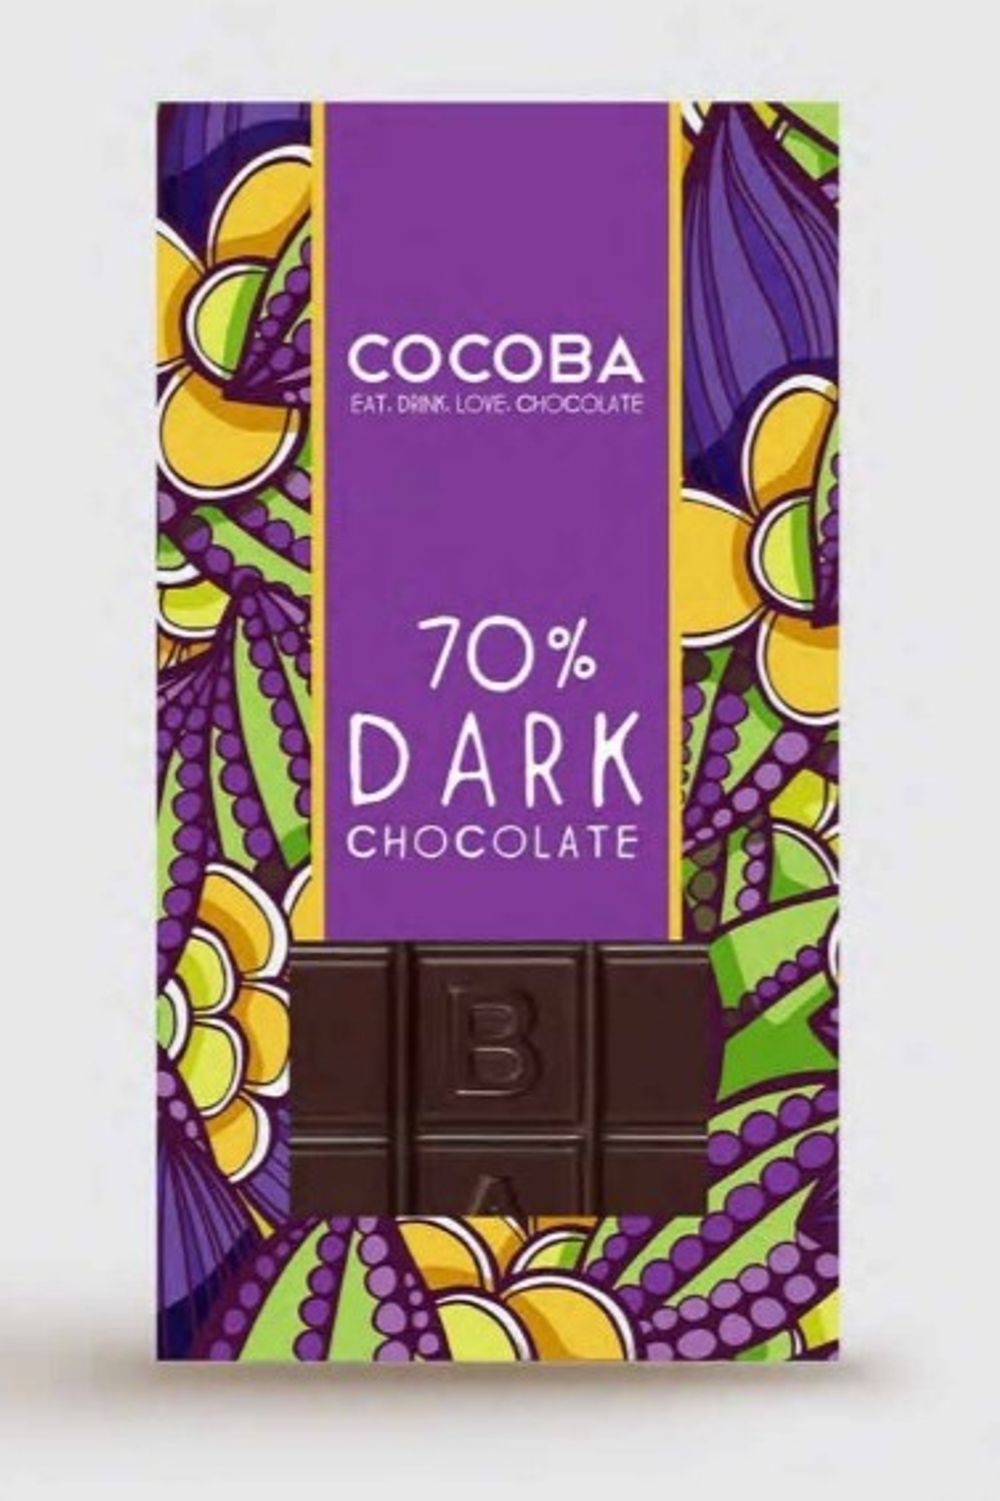 Cocoba Dark Chocolate 70% Bar